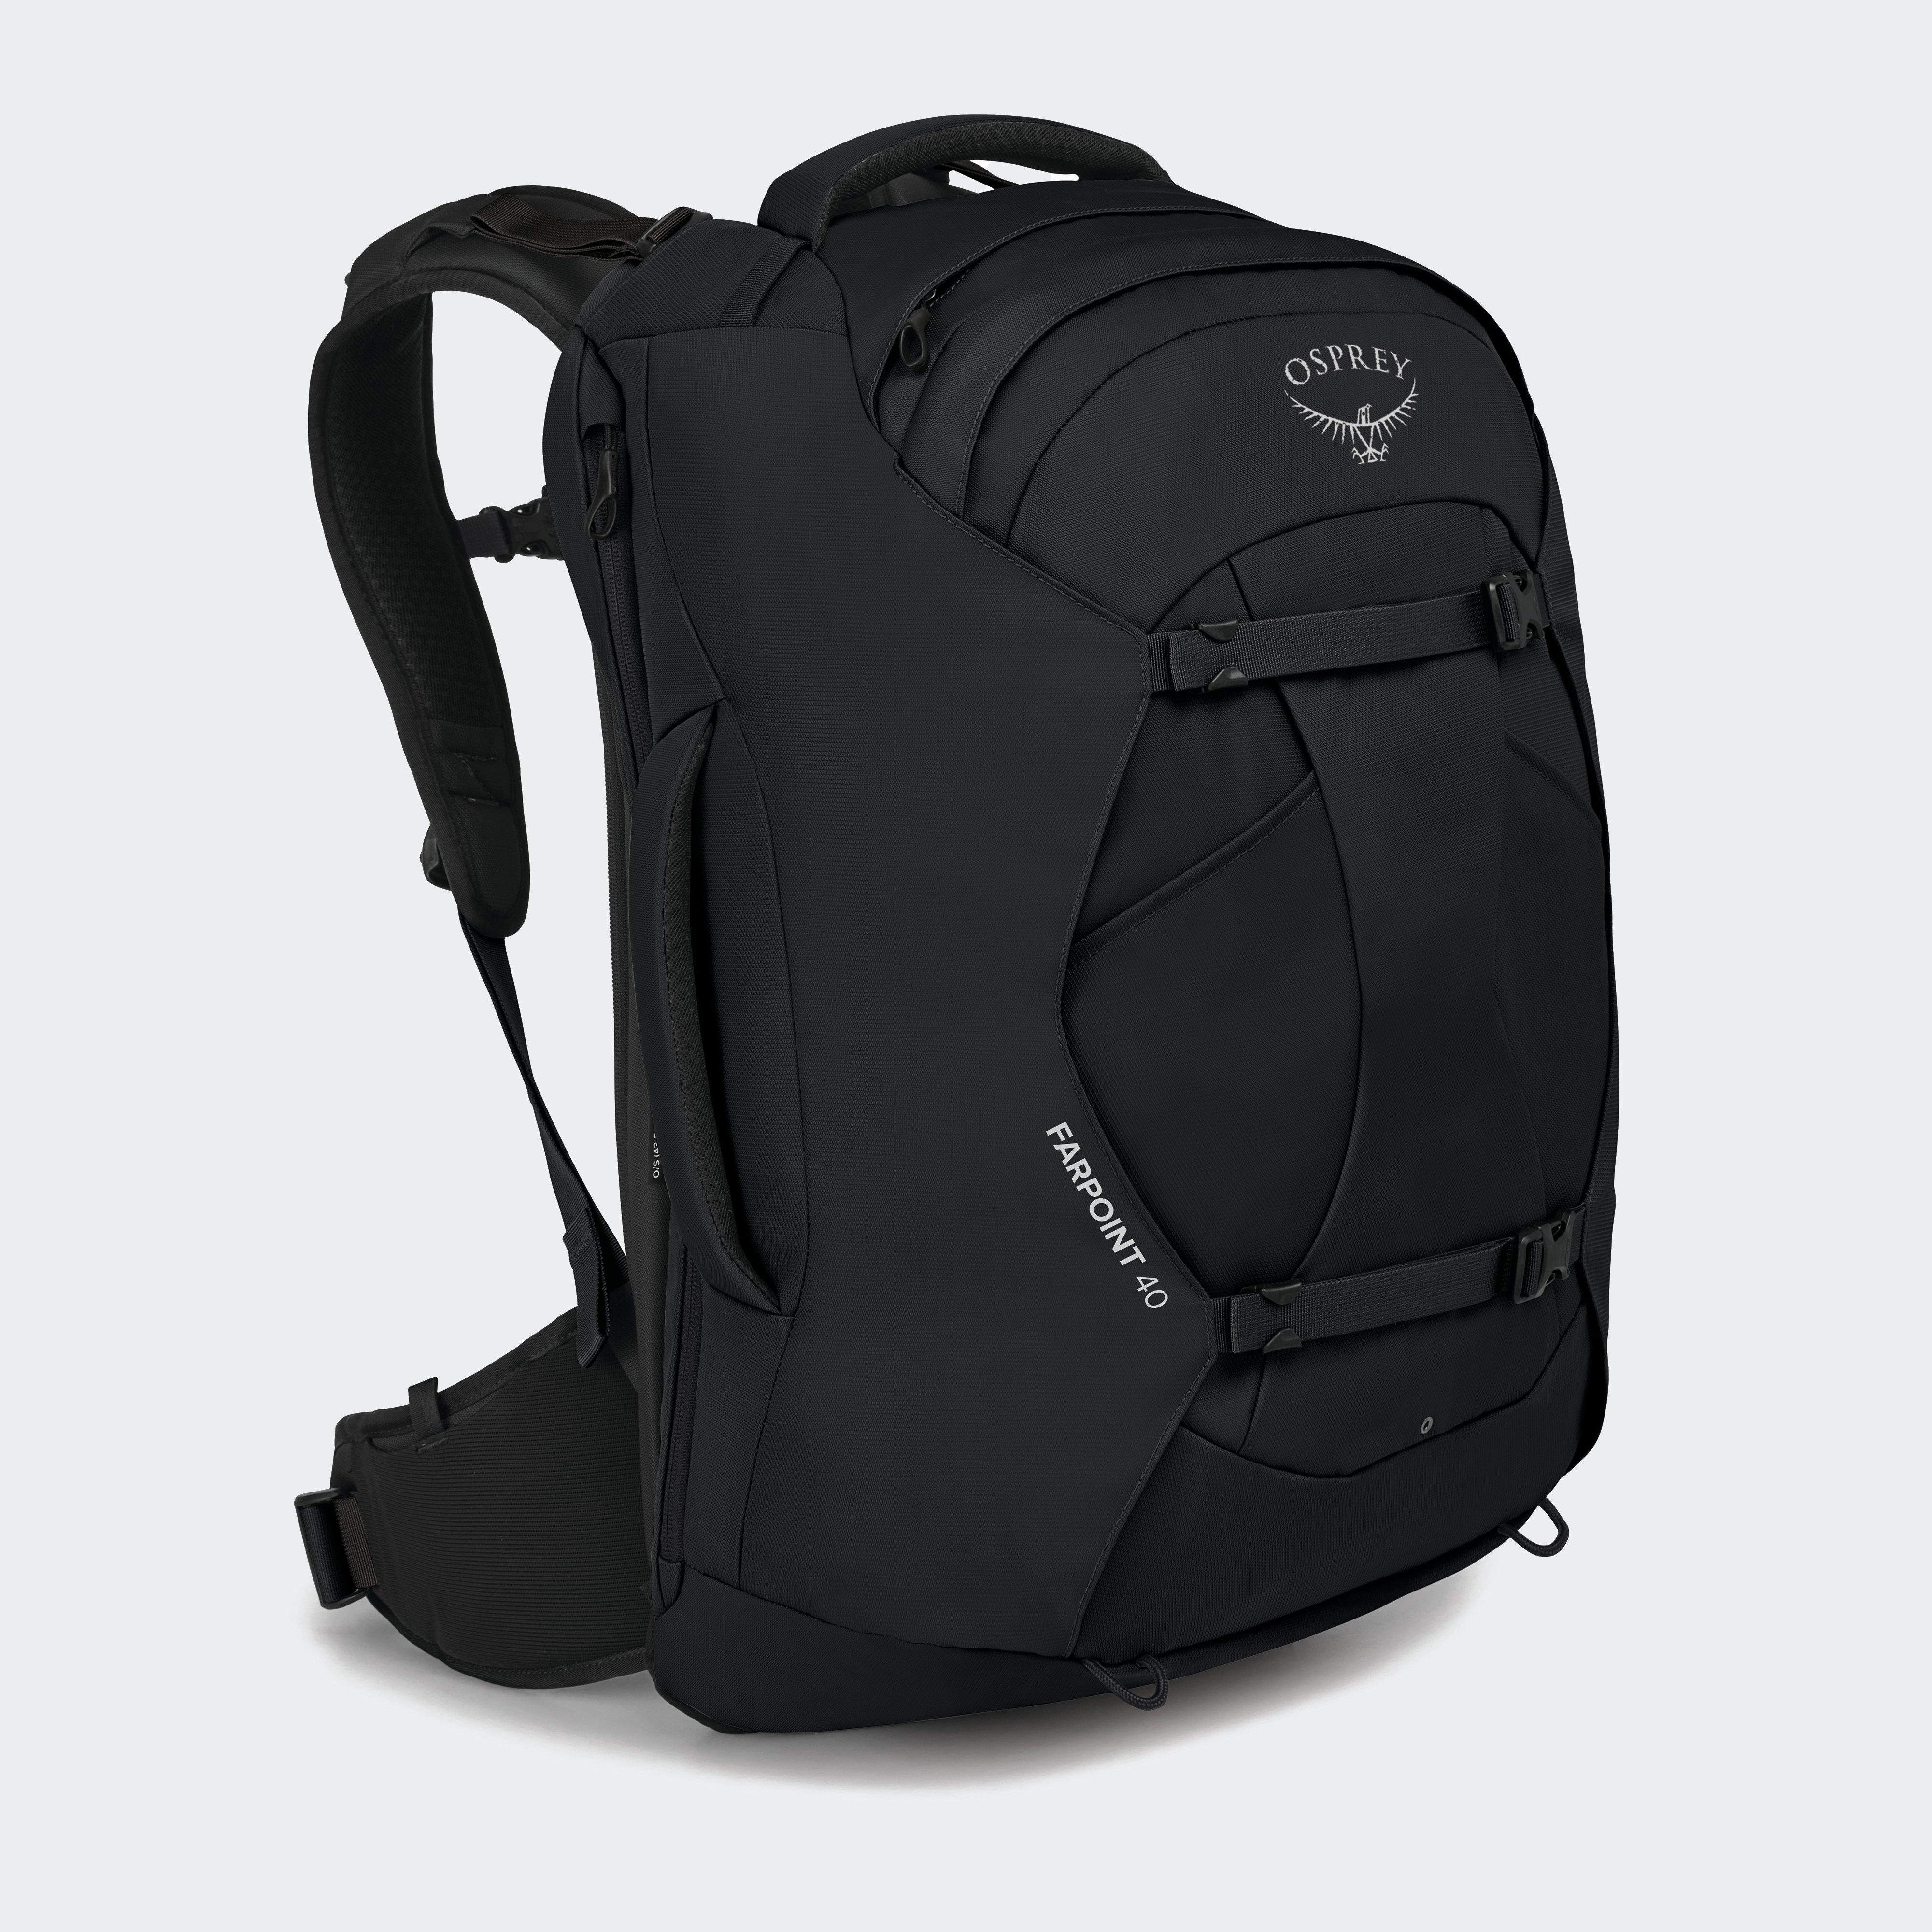  Osprey Farpoint 40L Travel Backpack, Black